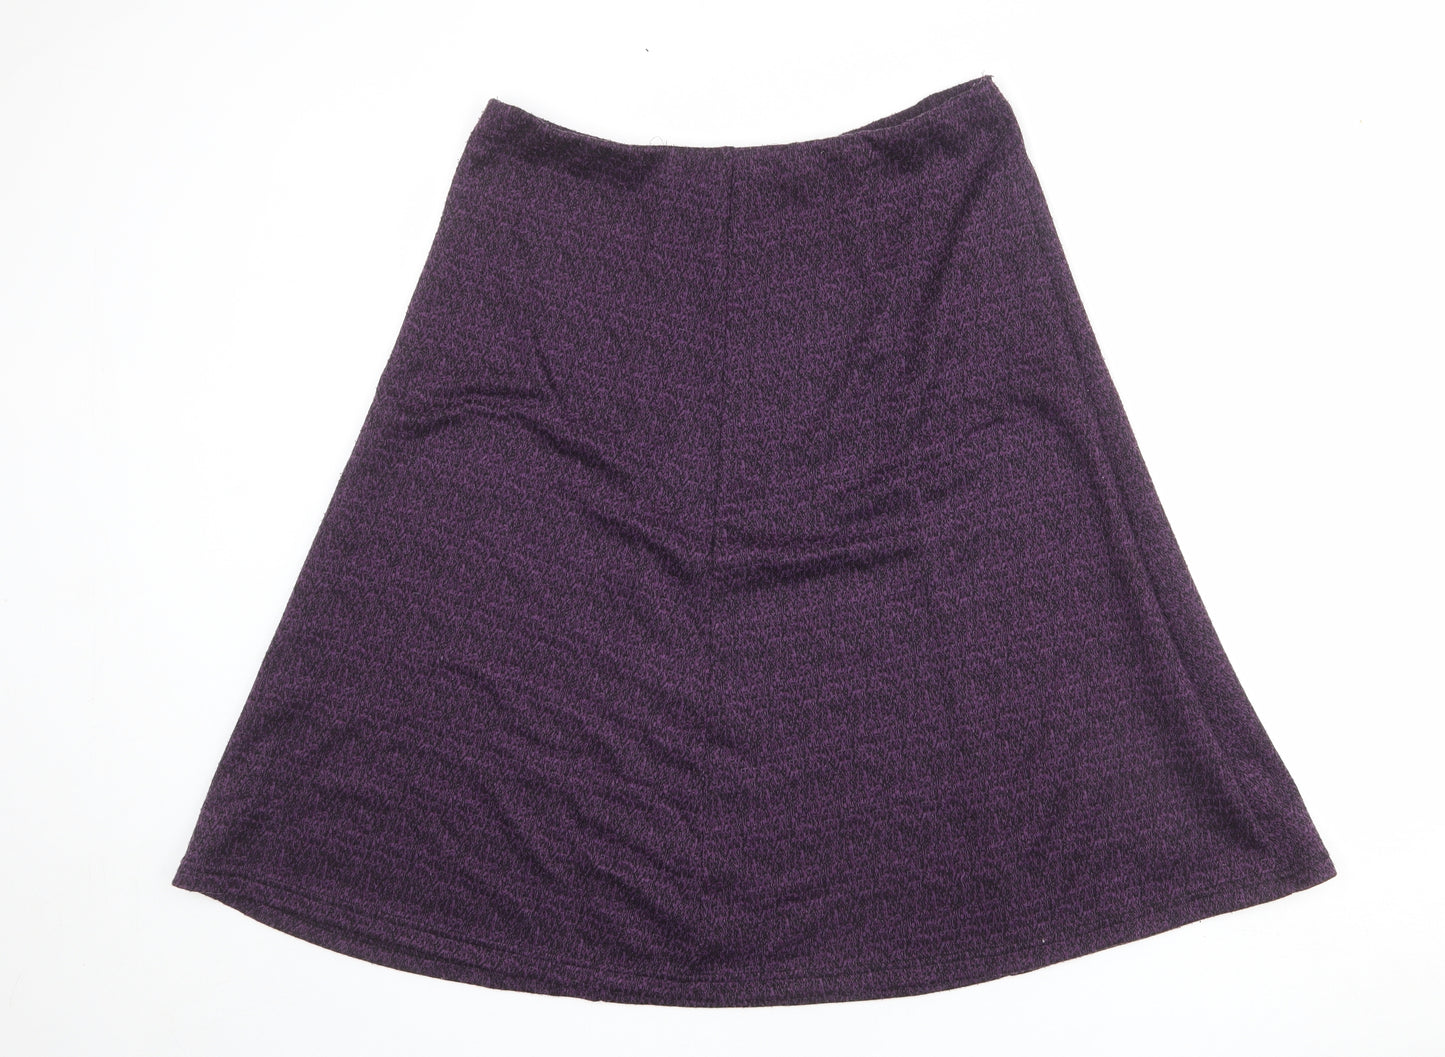 Bonmarché Womens Purple Geometric Polyester A-Line Skirt Size 16